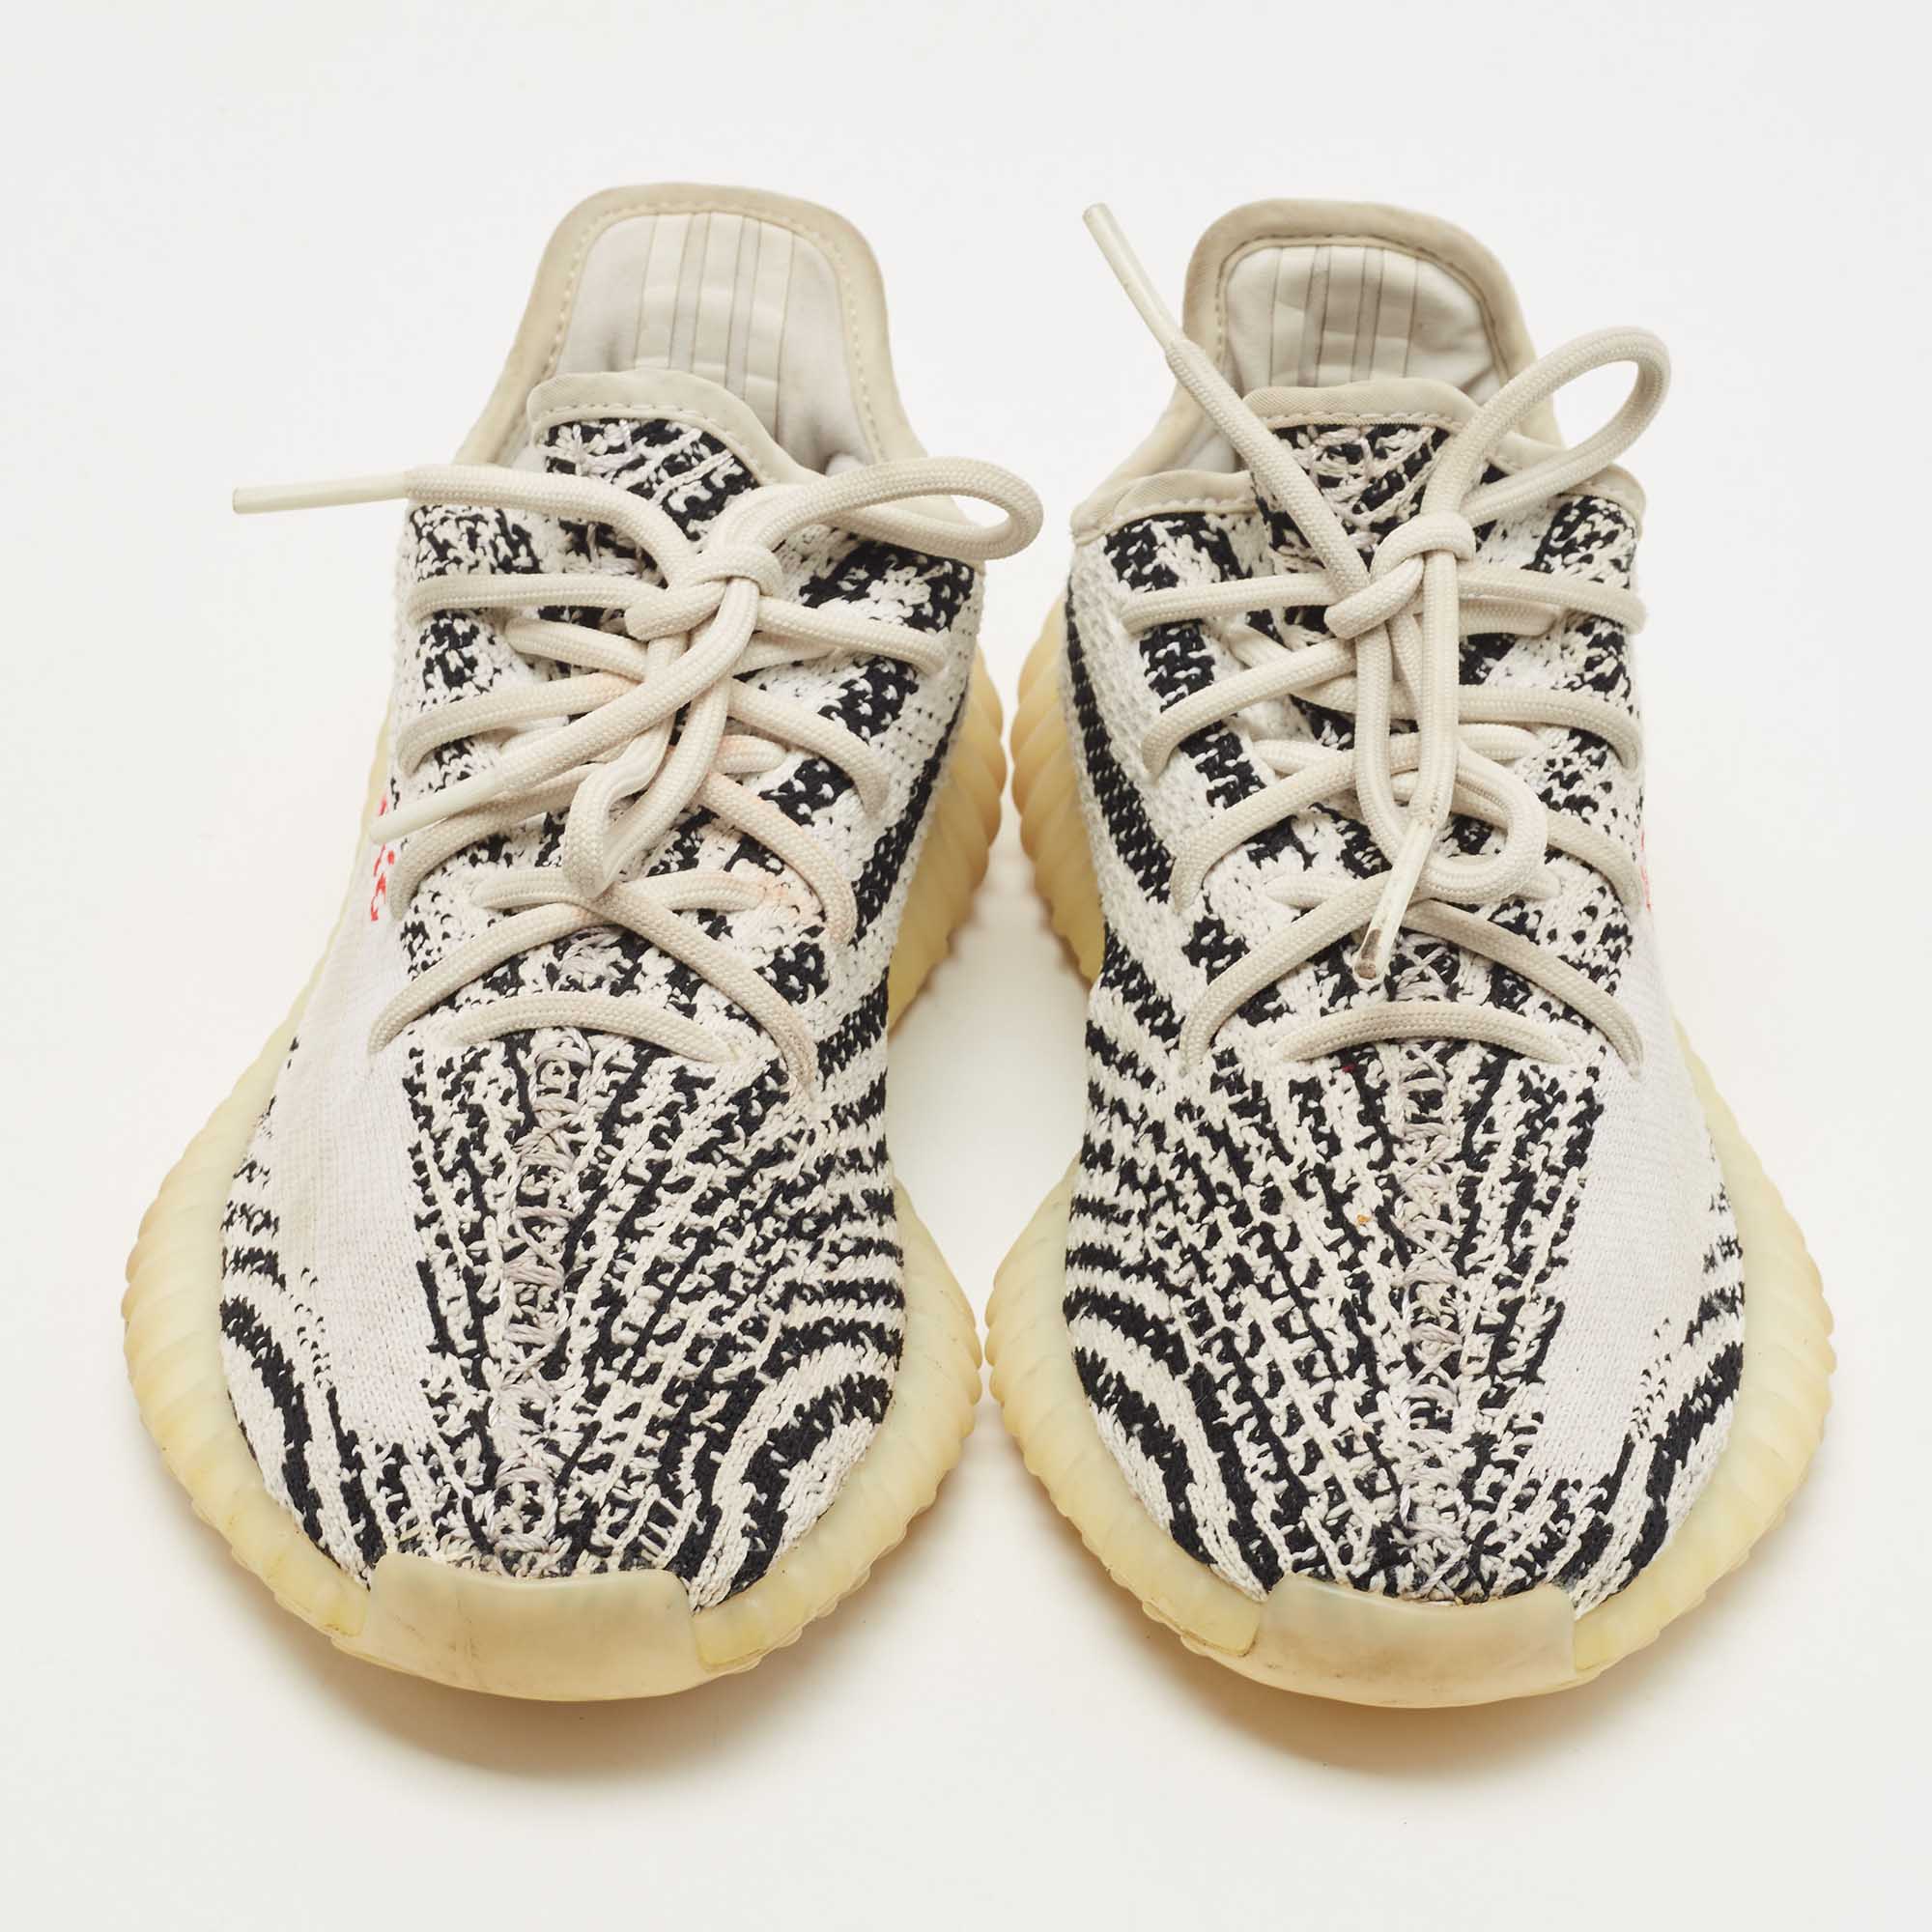 Yeezy X Adidas White/Black Knit Fabric Boost 350 V2 Zebra Sneakers Size 38